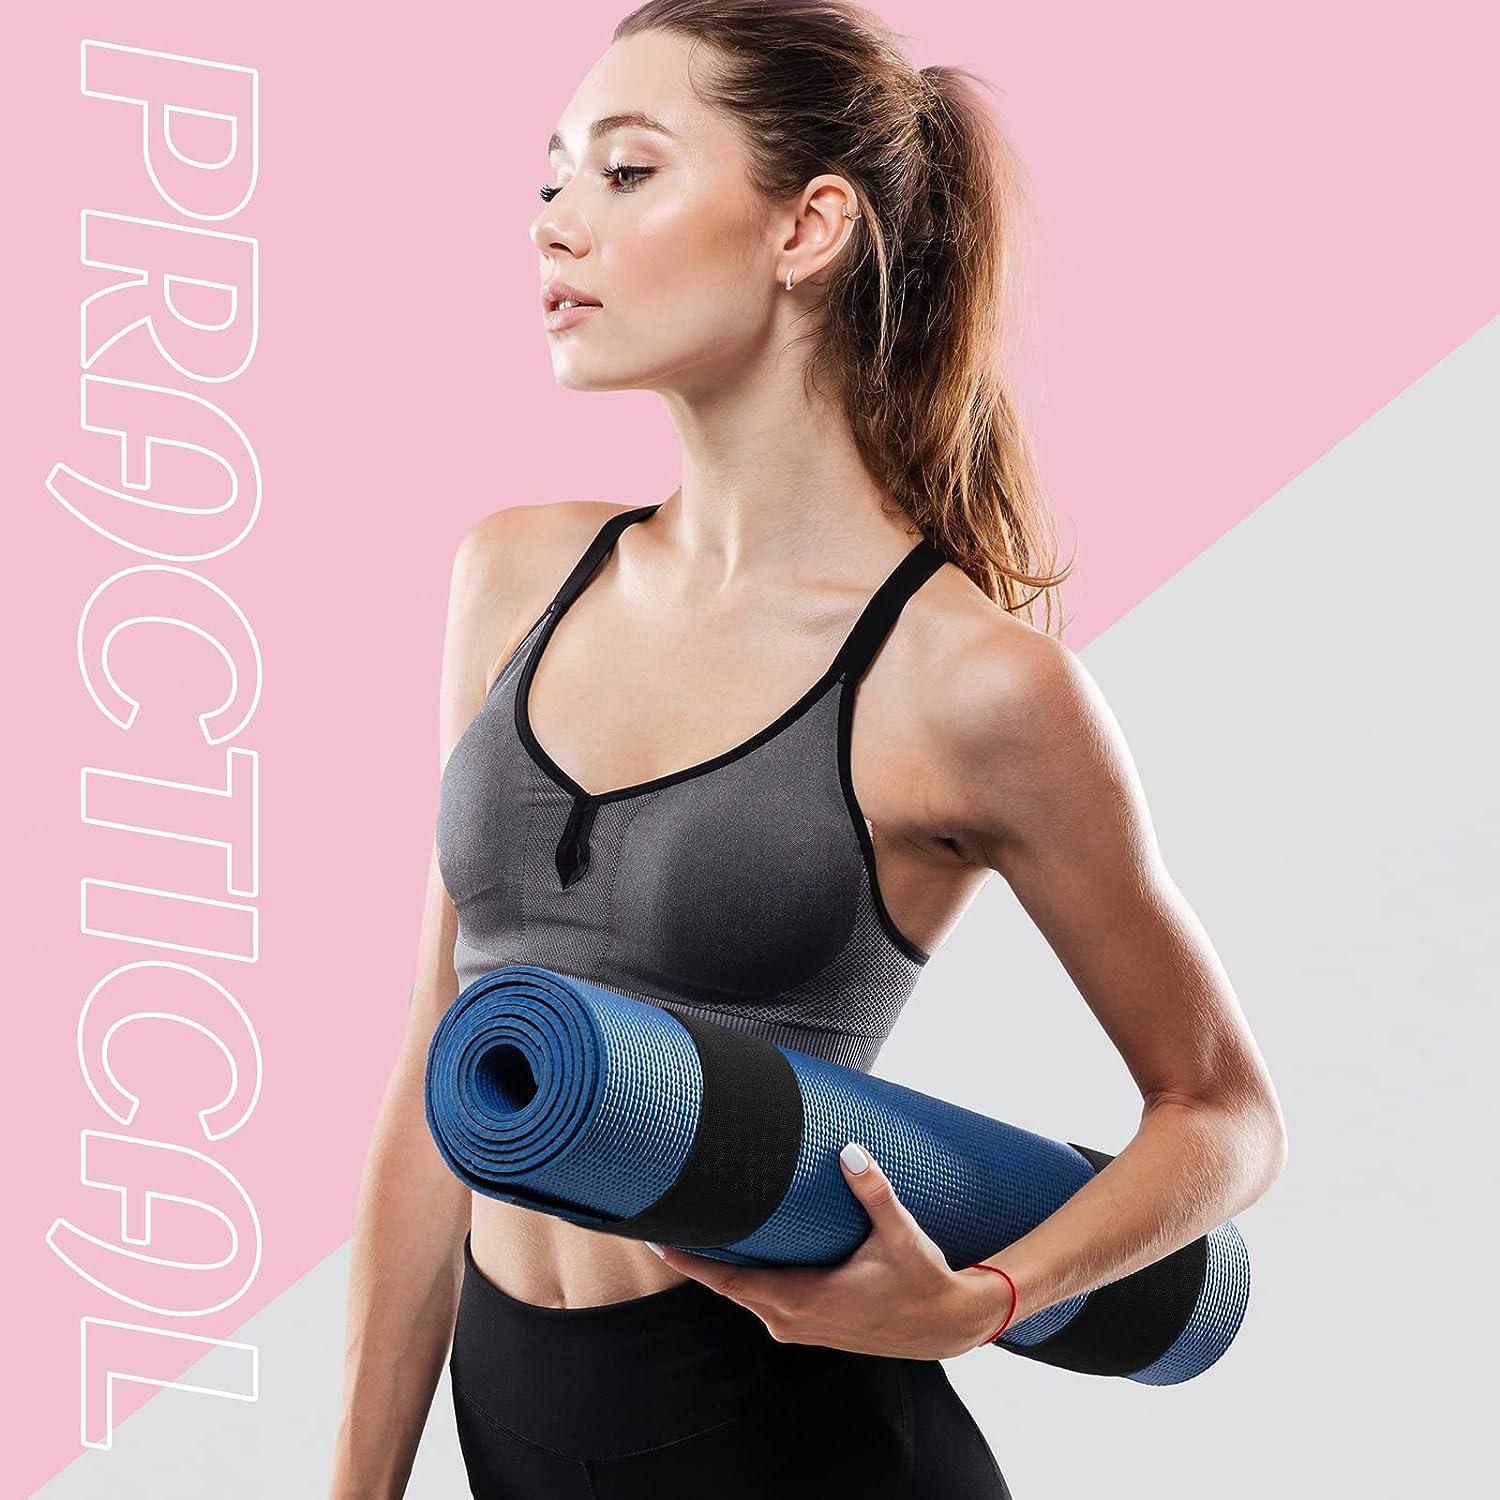 4 Pcs Yoga Mat Straps for Carrying Yoga Mat Holder Adjustable